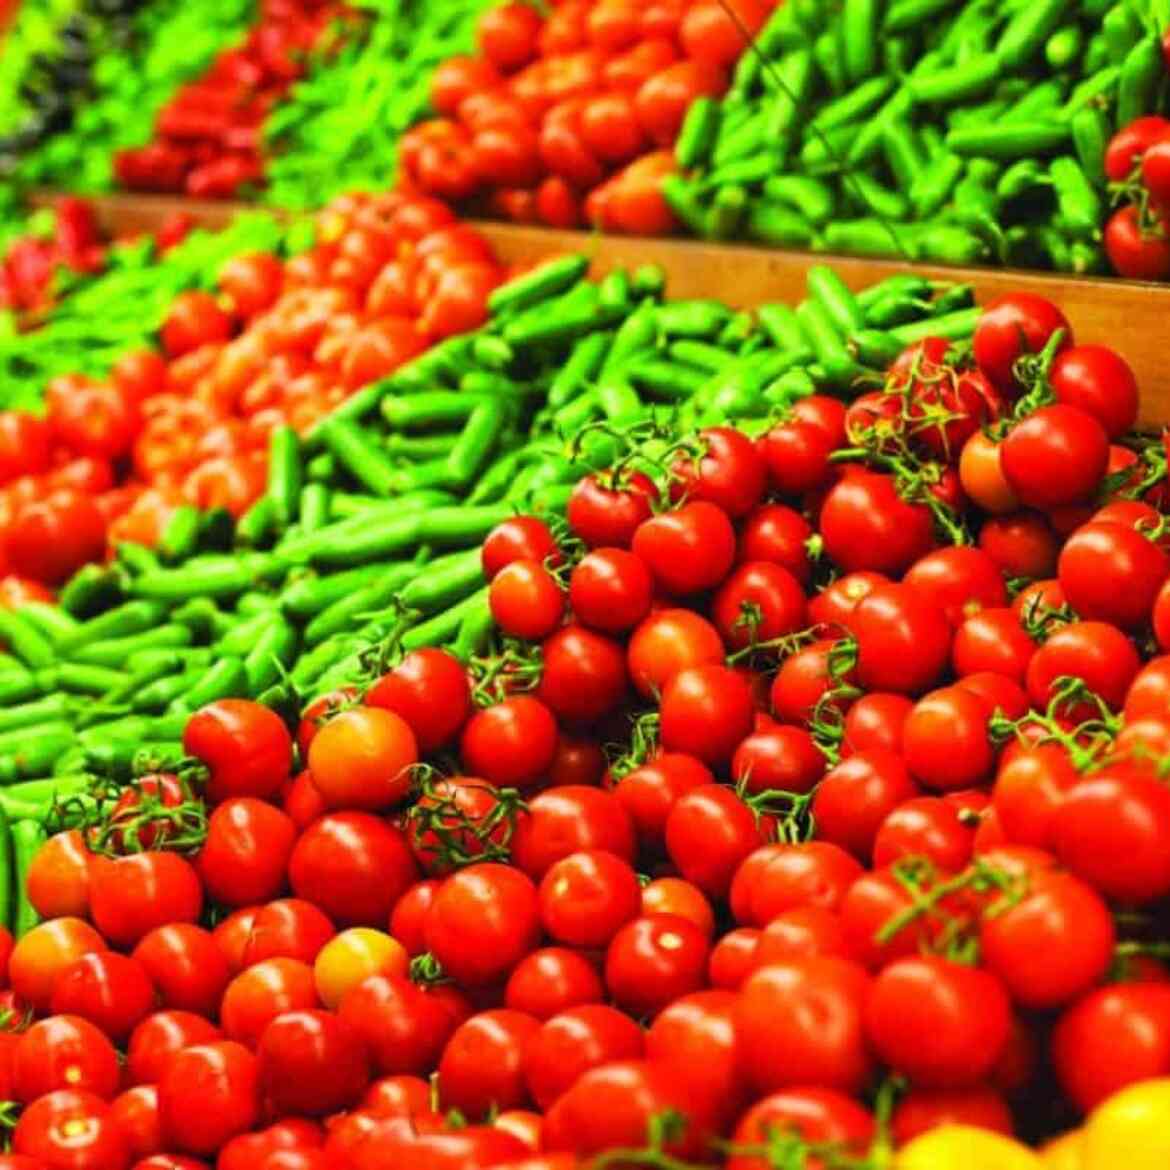 Tomatoes veg supermkt HR 1200x800 1